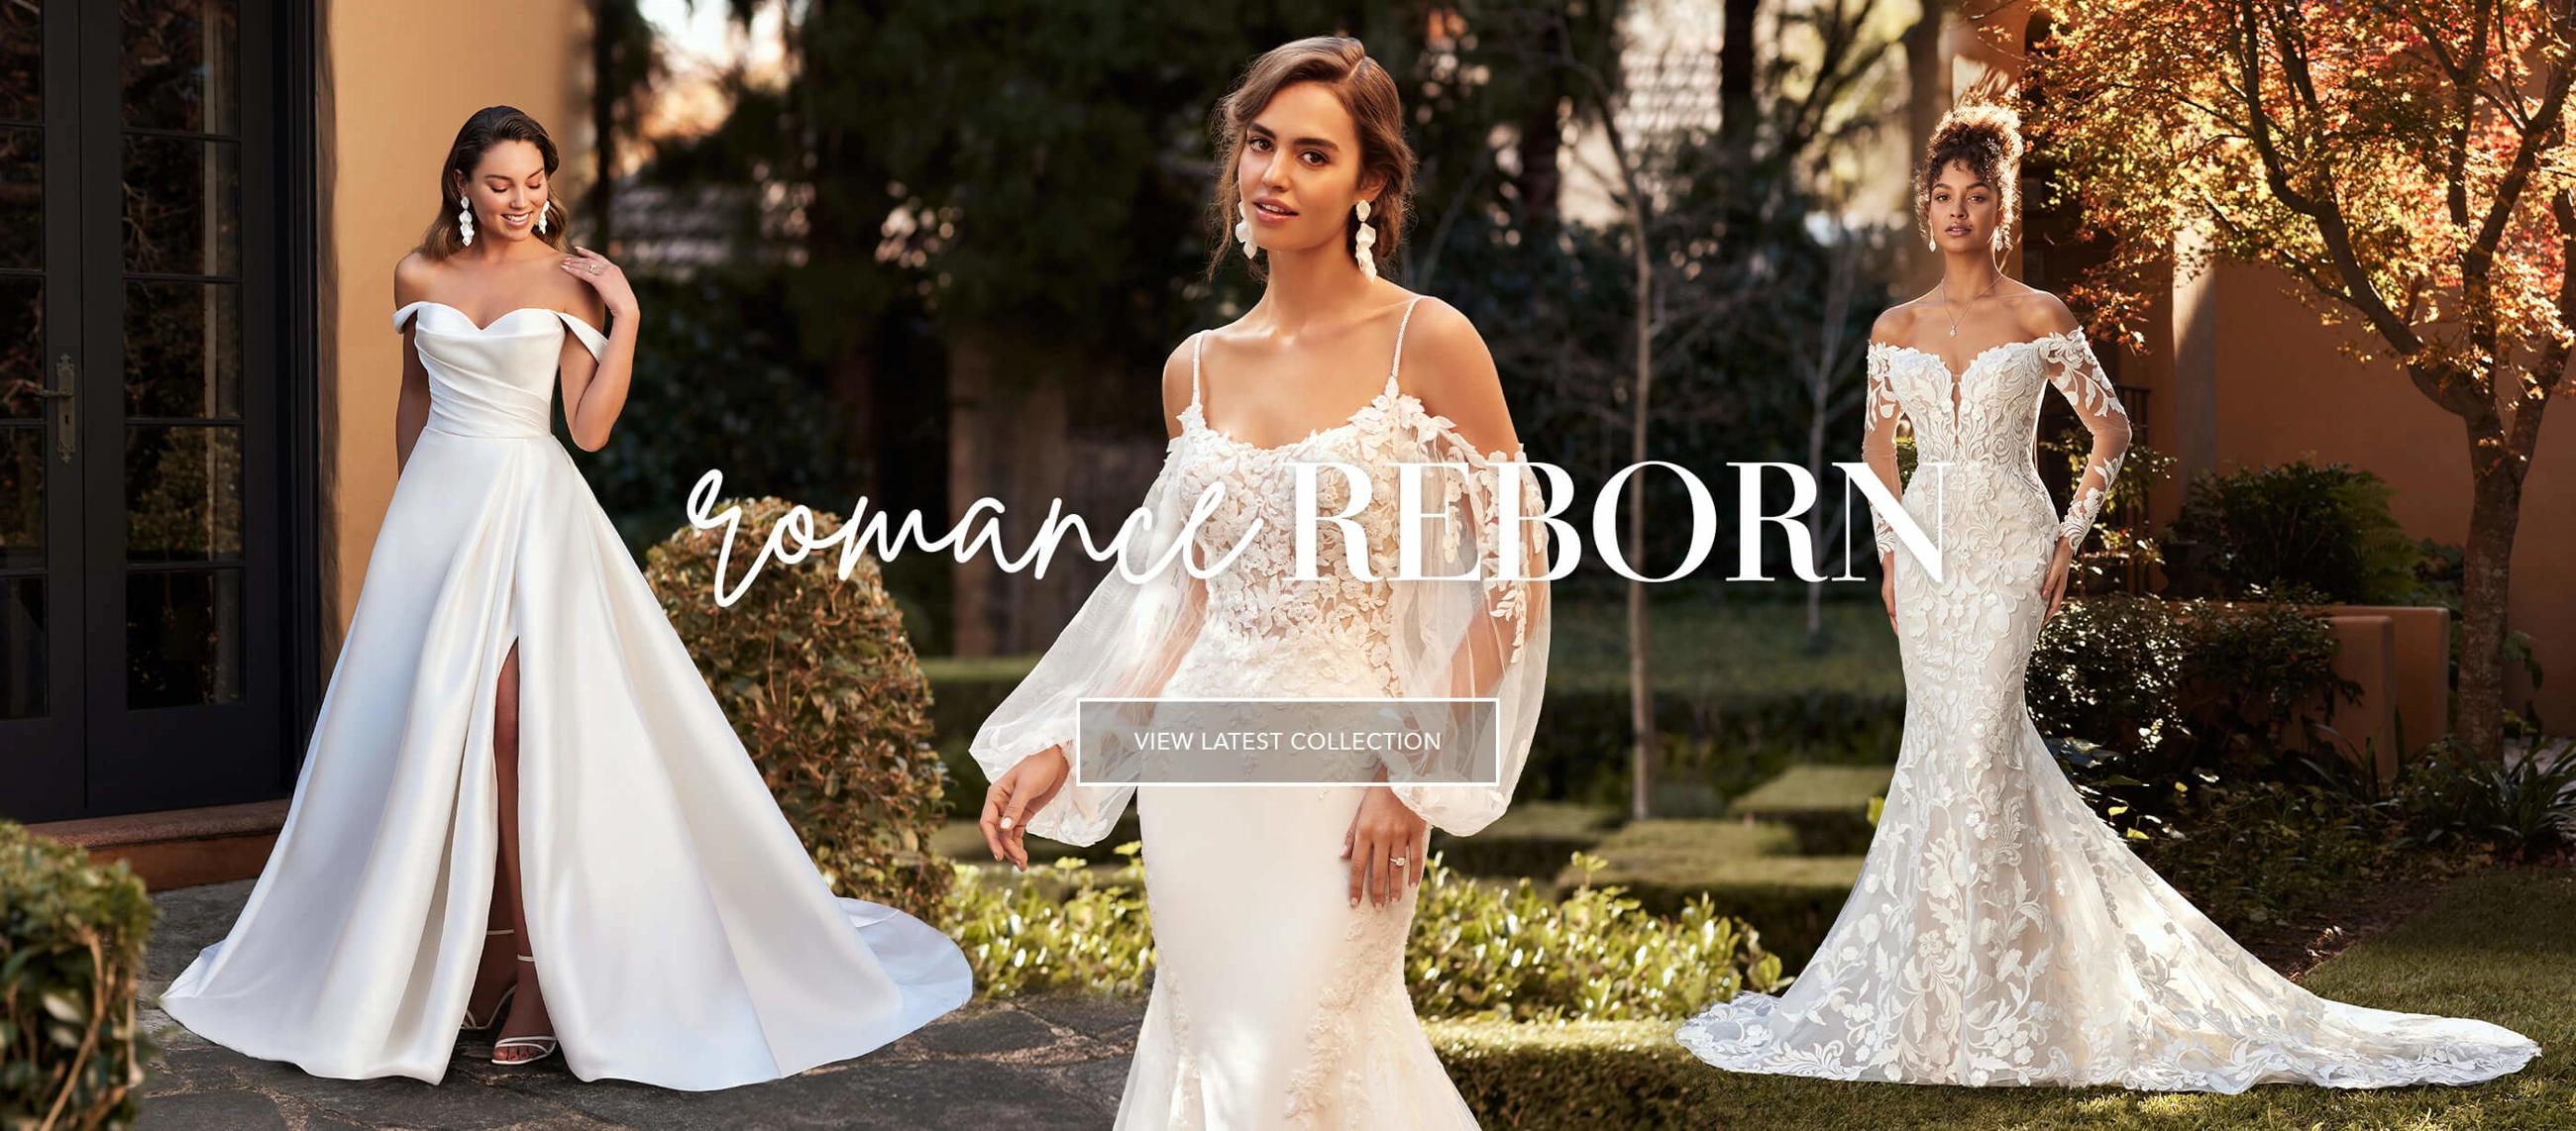 Romance Reborn Wedding Dresses by Sophia Tolli Desktop Image